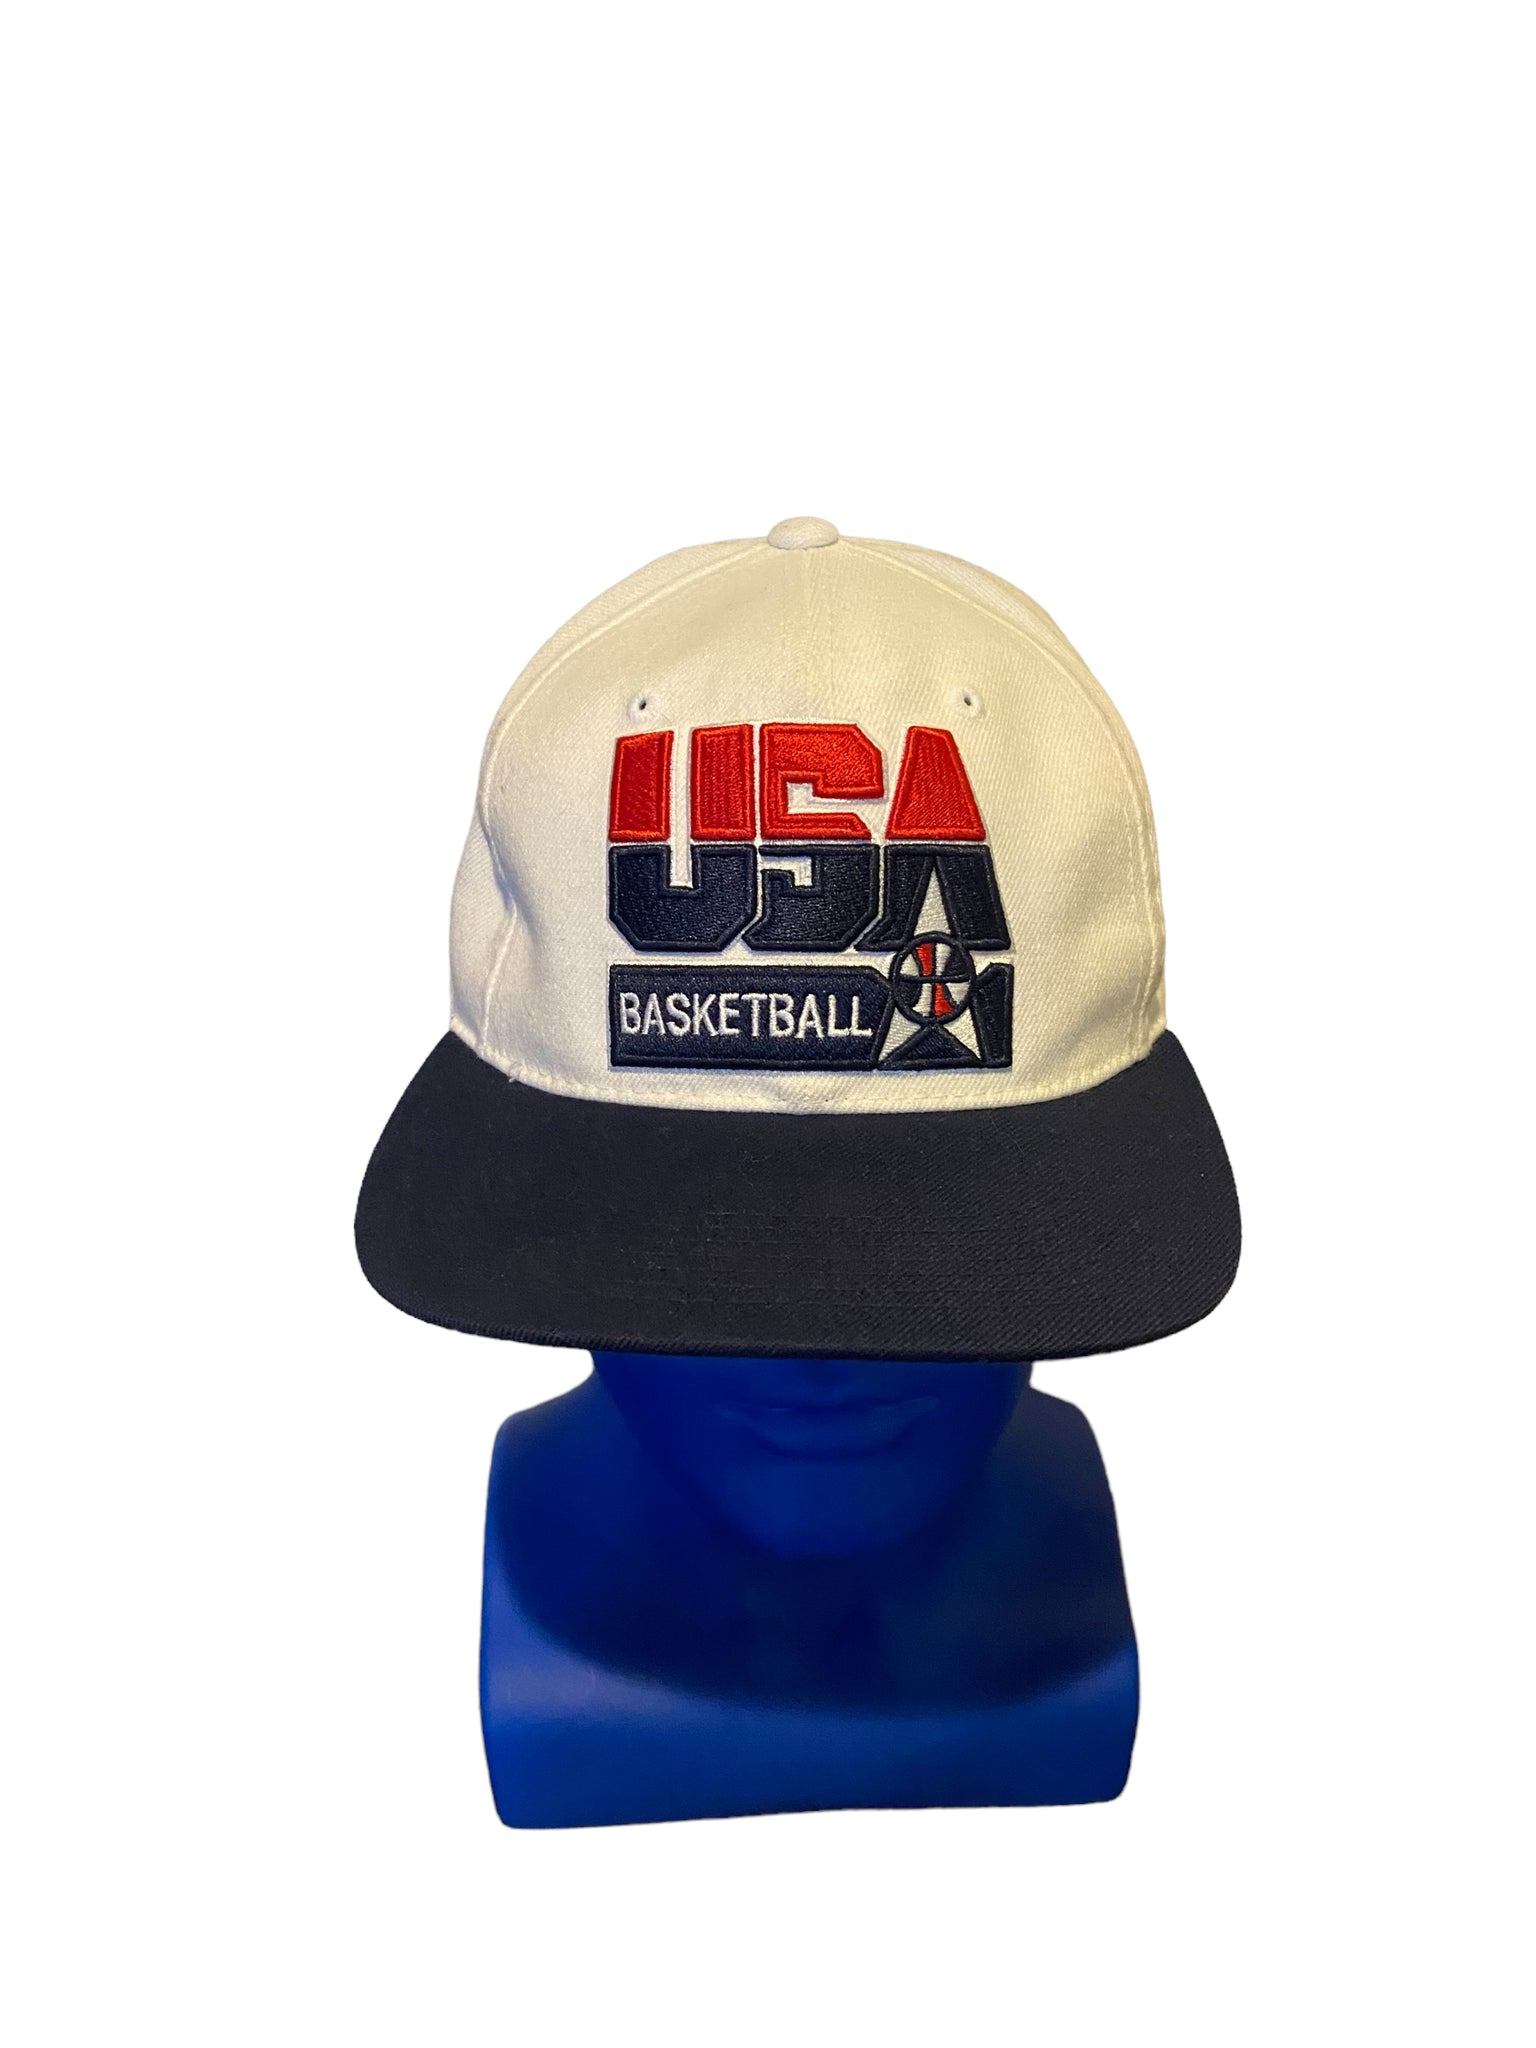 2019 Mitchell & Ness nostalgia co dream team 1992 USA basketball snapback hat